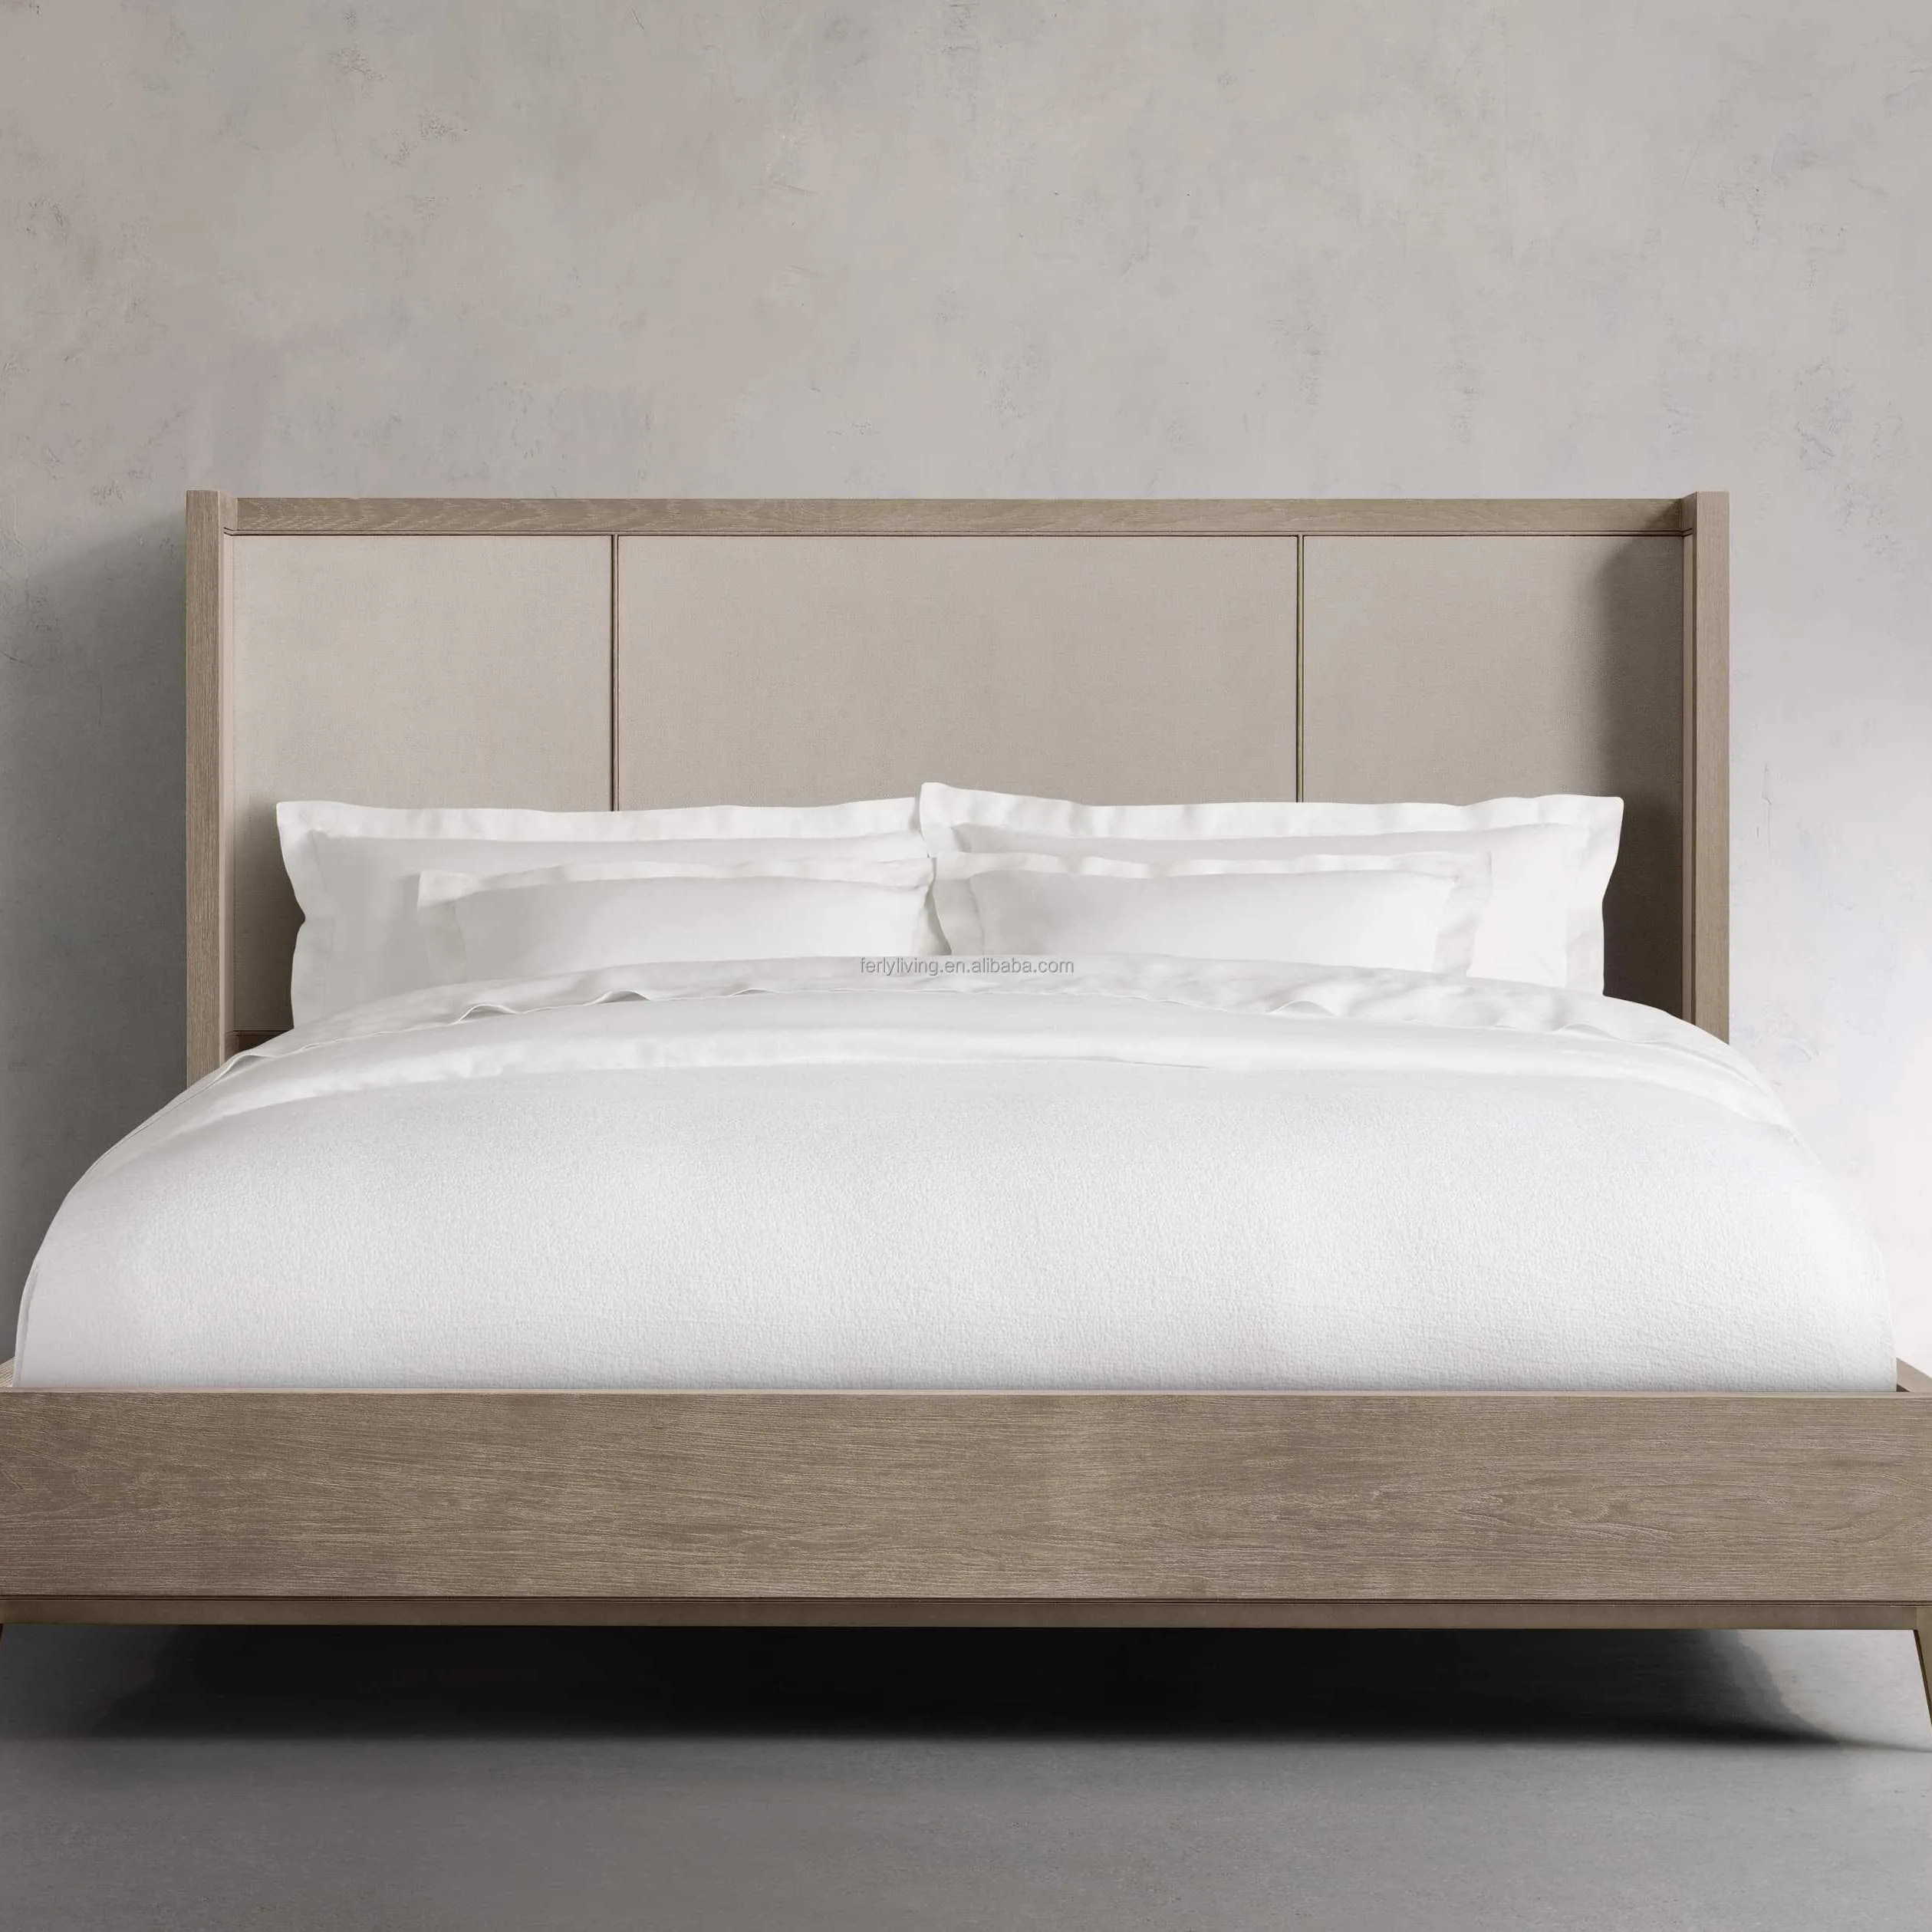 Modern American Bedroom Home Furniture Hotel Bed American Wood Living Room Reclaimed Oak Solid Wood Bed